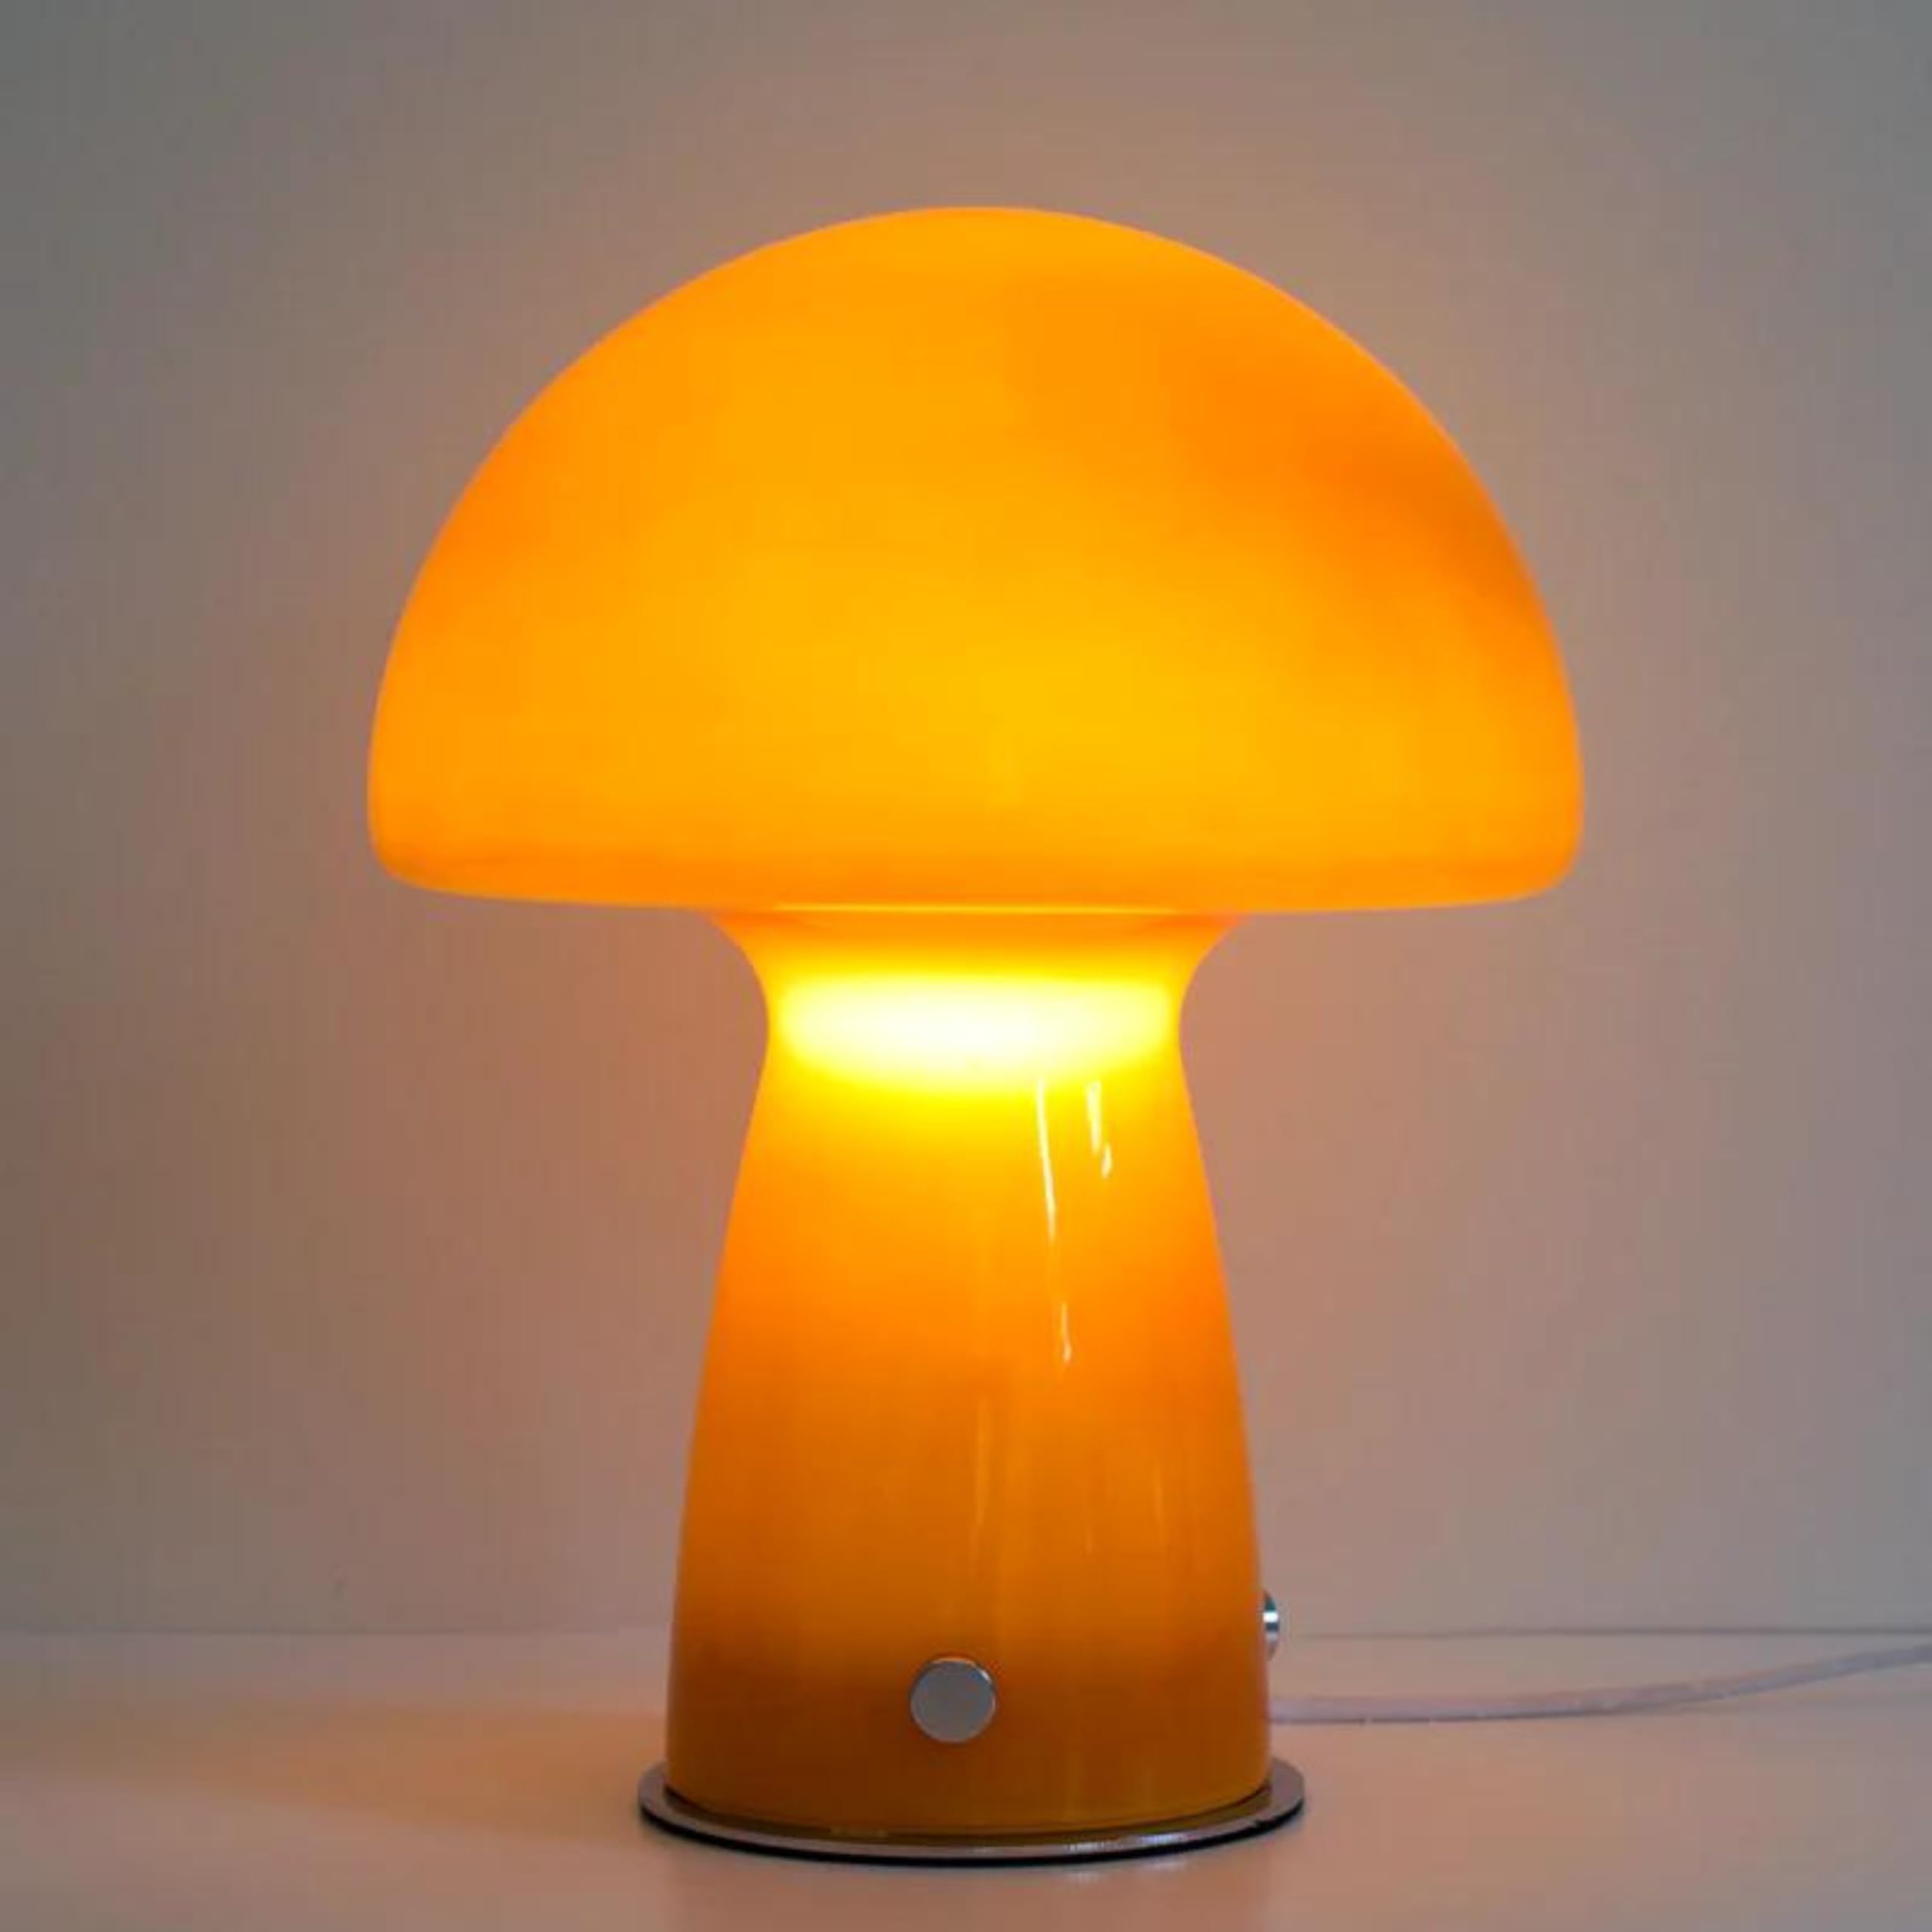 Valley Cruise Press Midcentury Mushroom Lamp - Imported Glass Mushroom Table Lamp - Premium LED Touch Lamp for Mid Century Modern Decor or Elevated Mushroom Decor